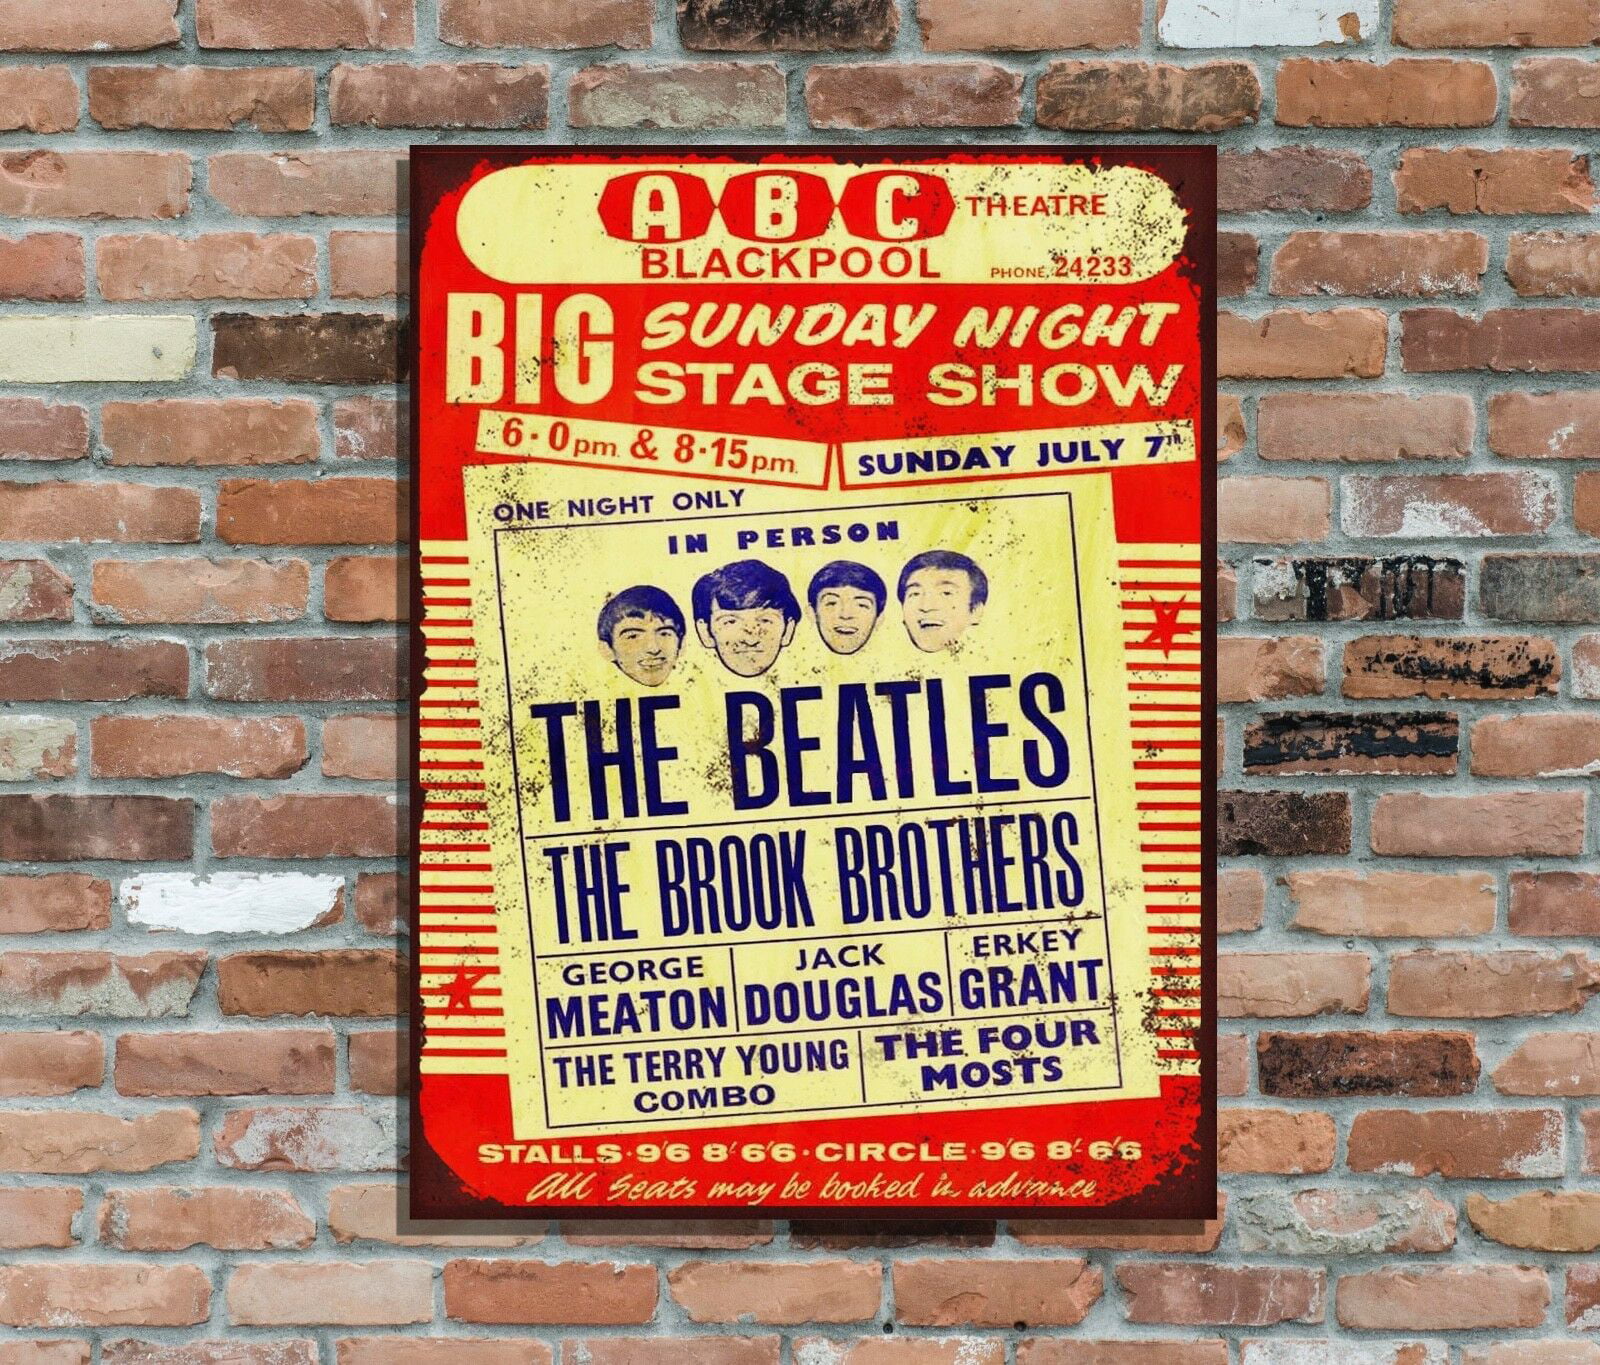 The Beatles Métal concert poster wall sign